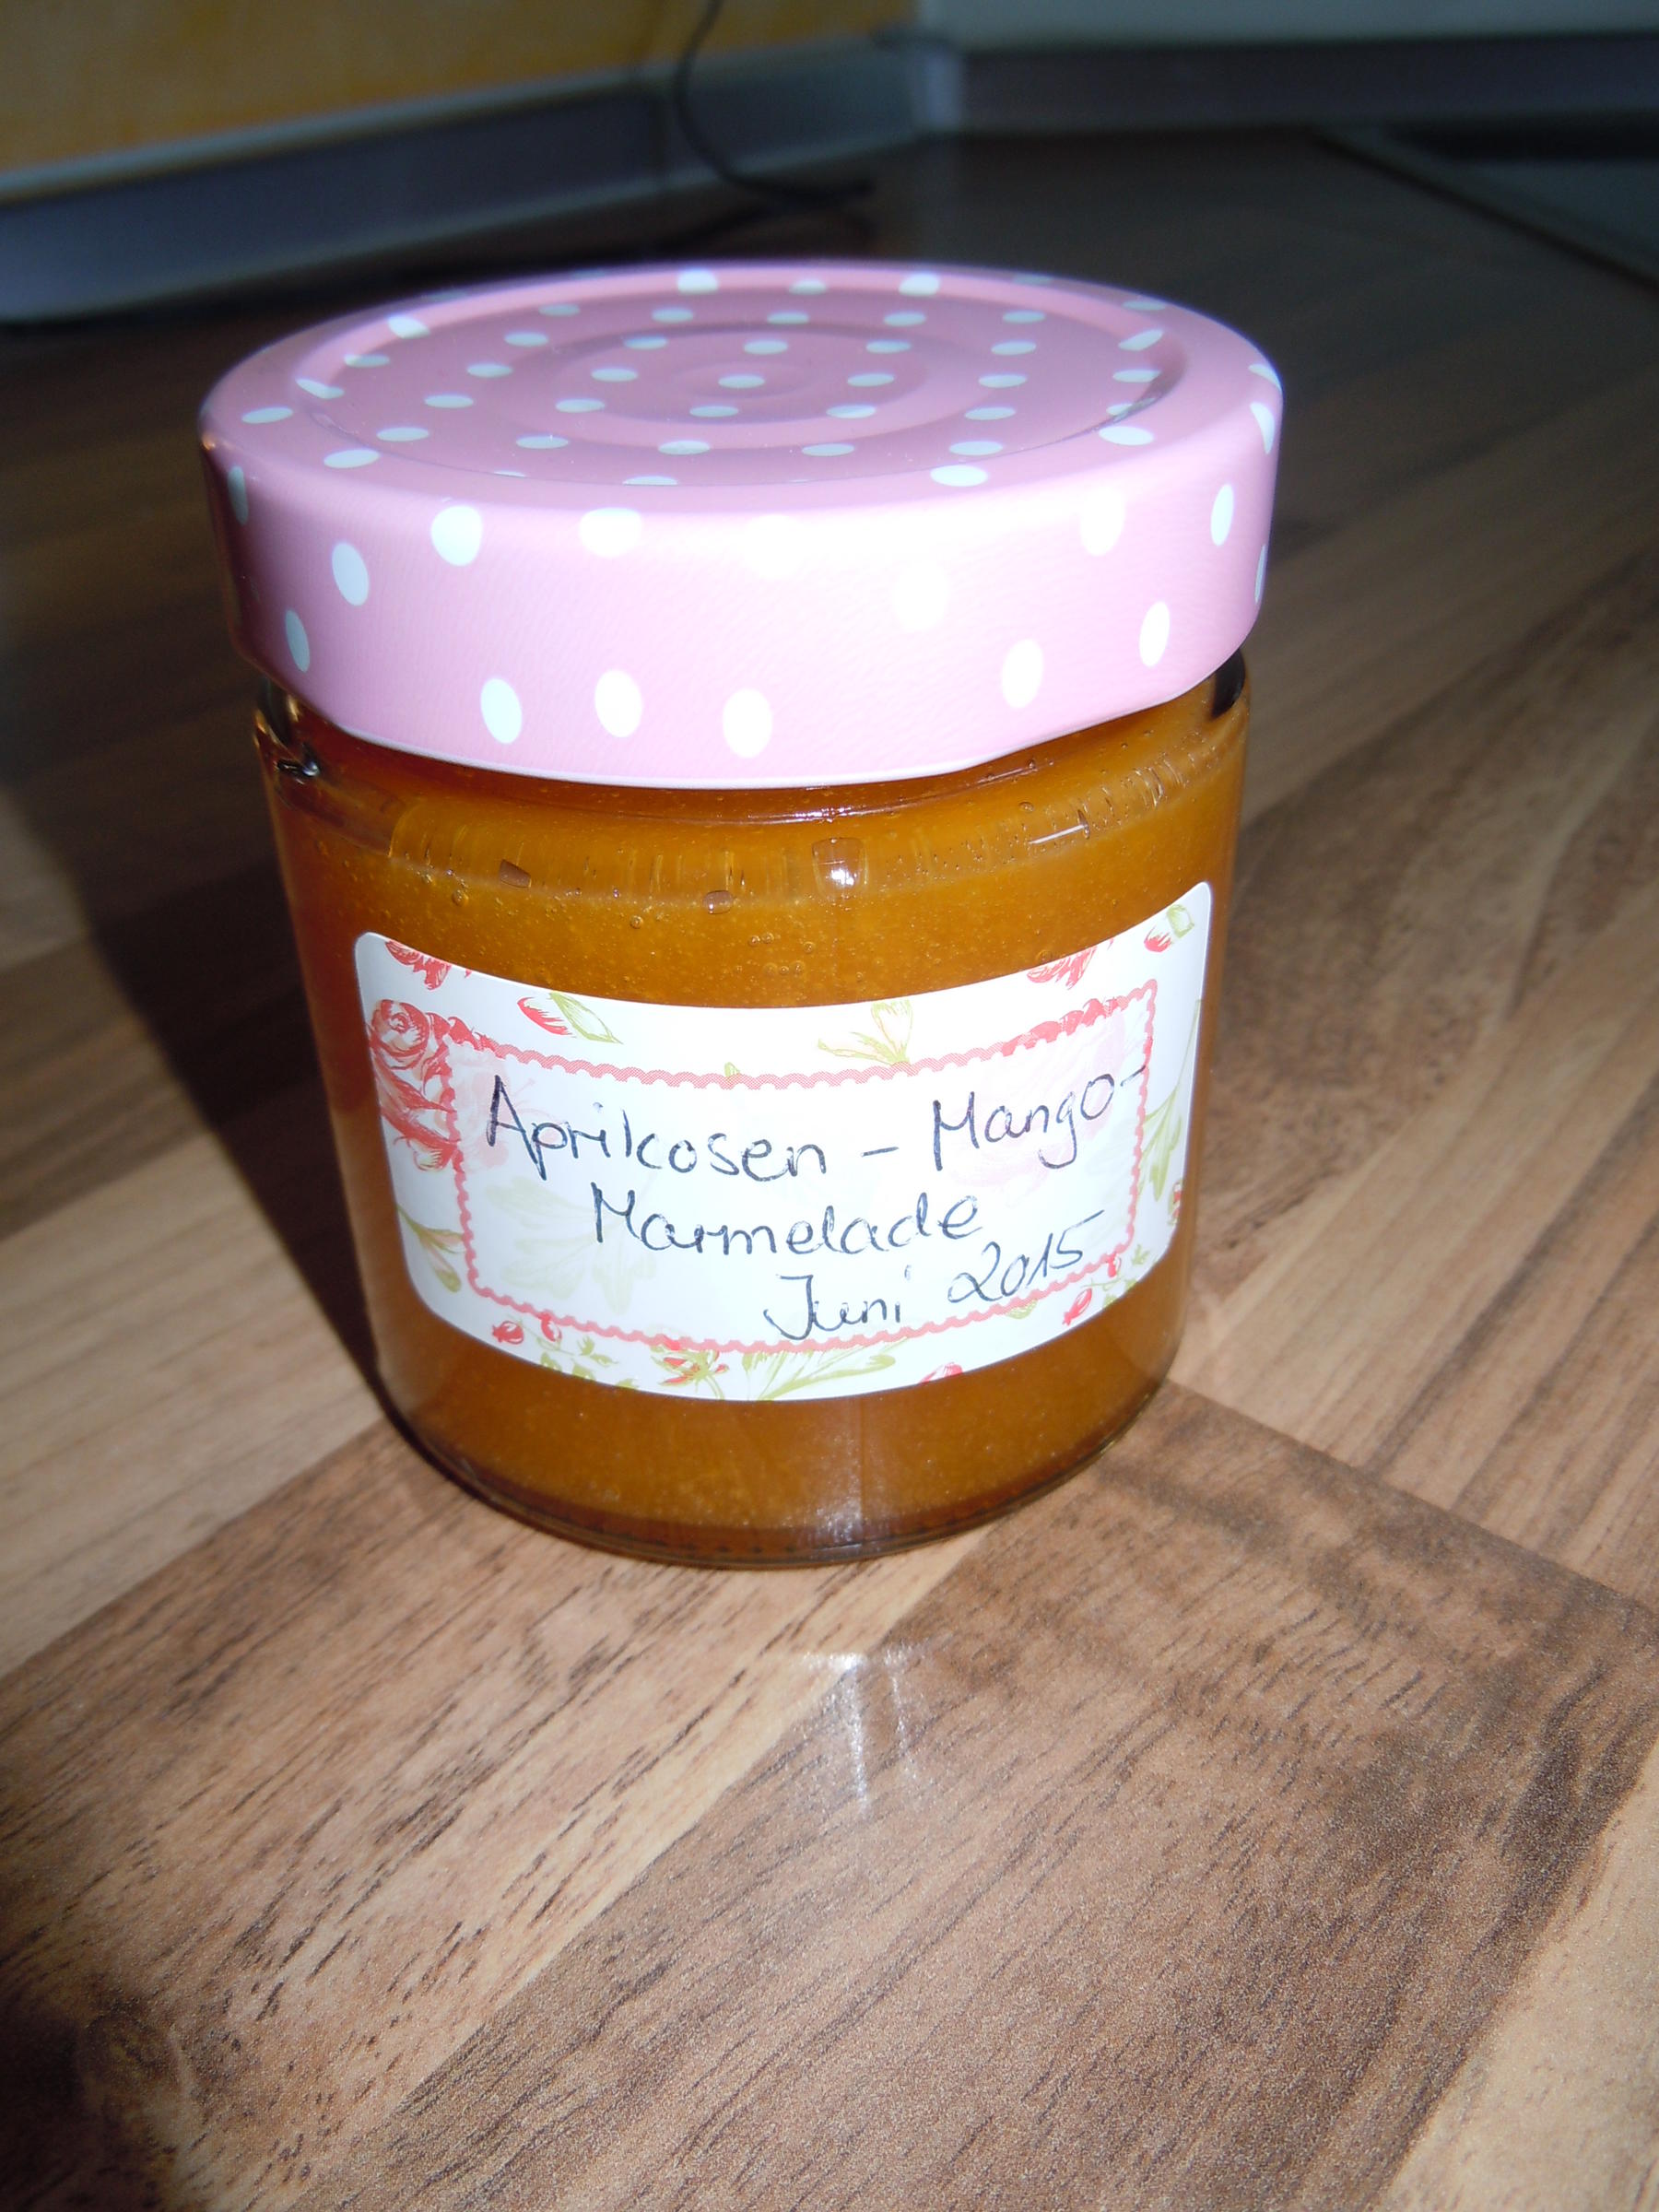 Aprikosen-Mango-Marmelade - Rezept By Alexusis | Eine Vielzahl von ...